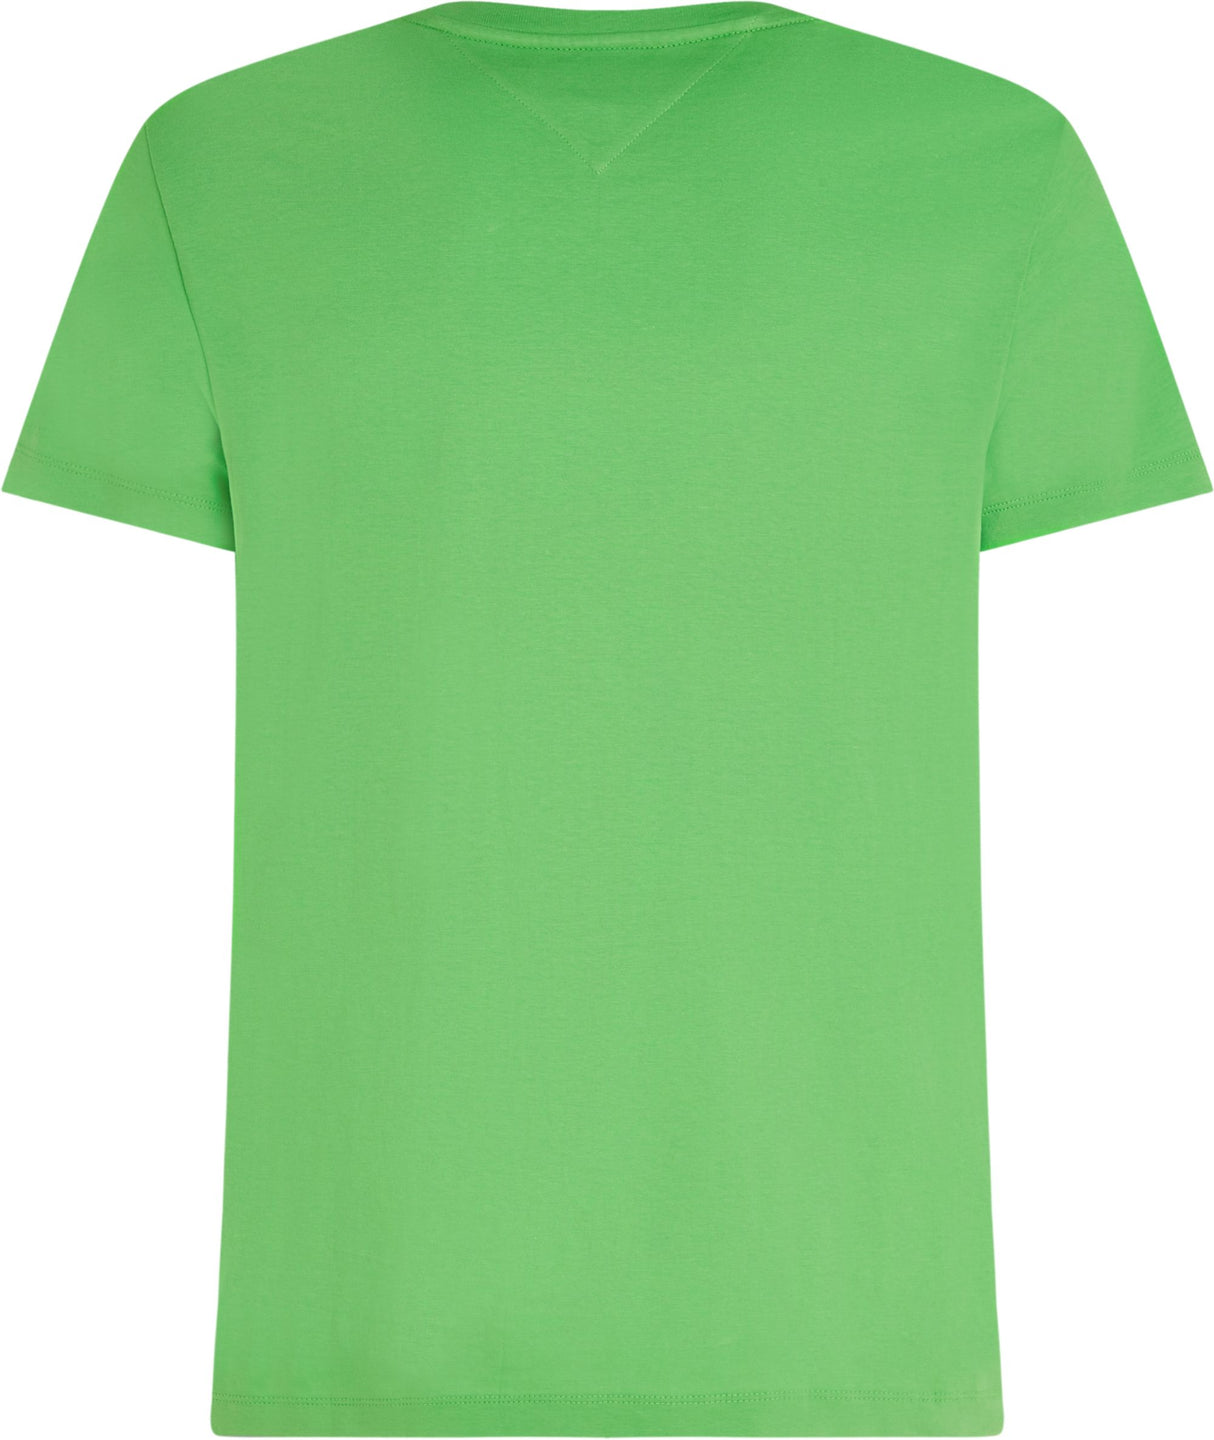 Tommy Hilfiger Brand Love Green T-Shirt Green